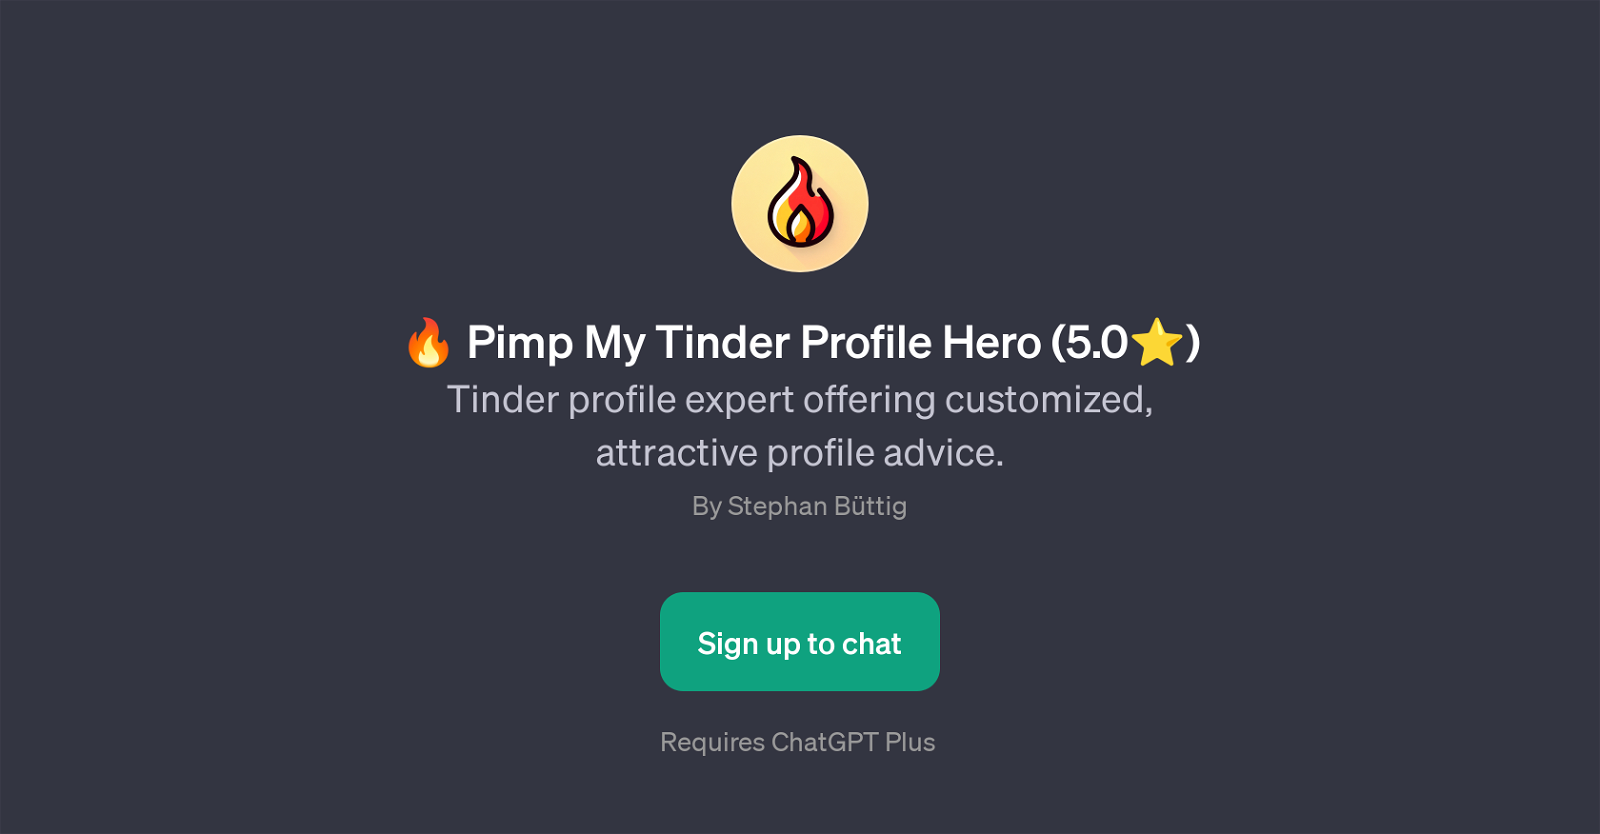 Pimp My Tinder Profile Hero website